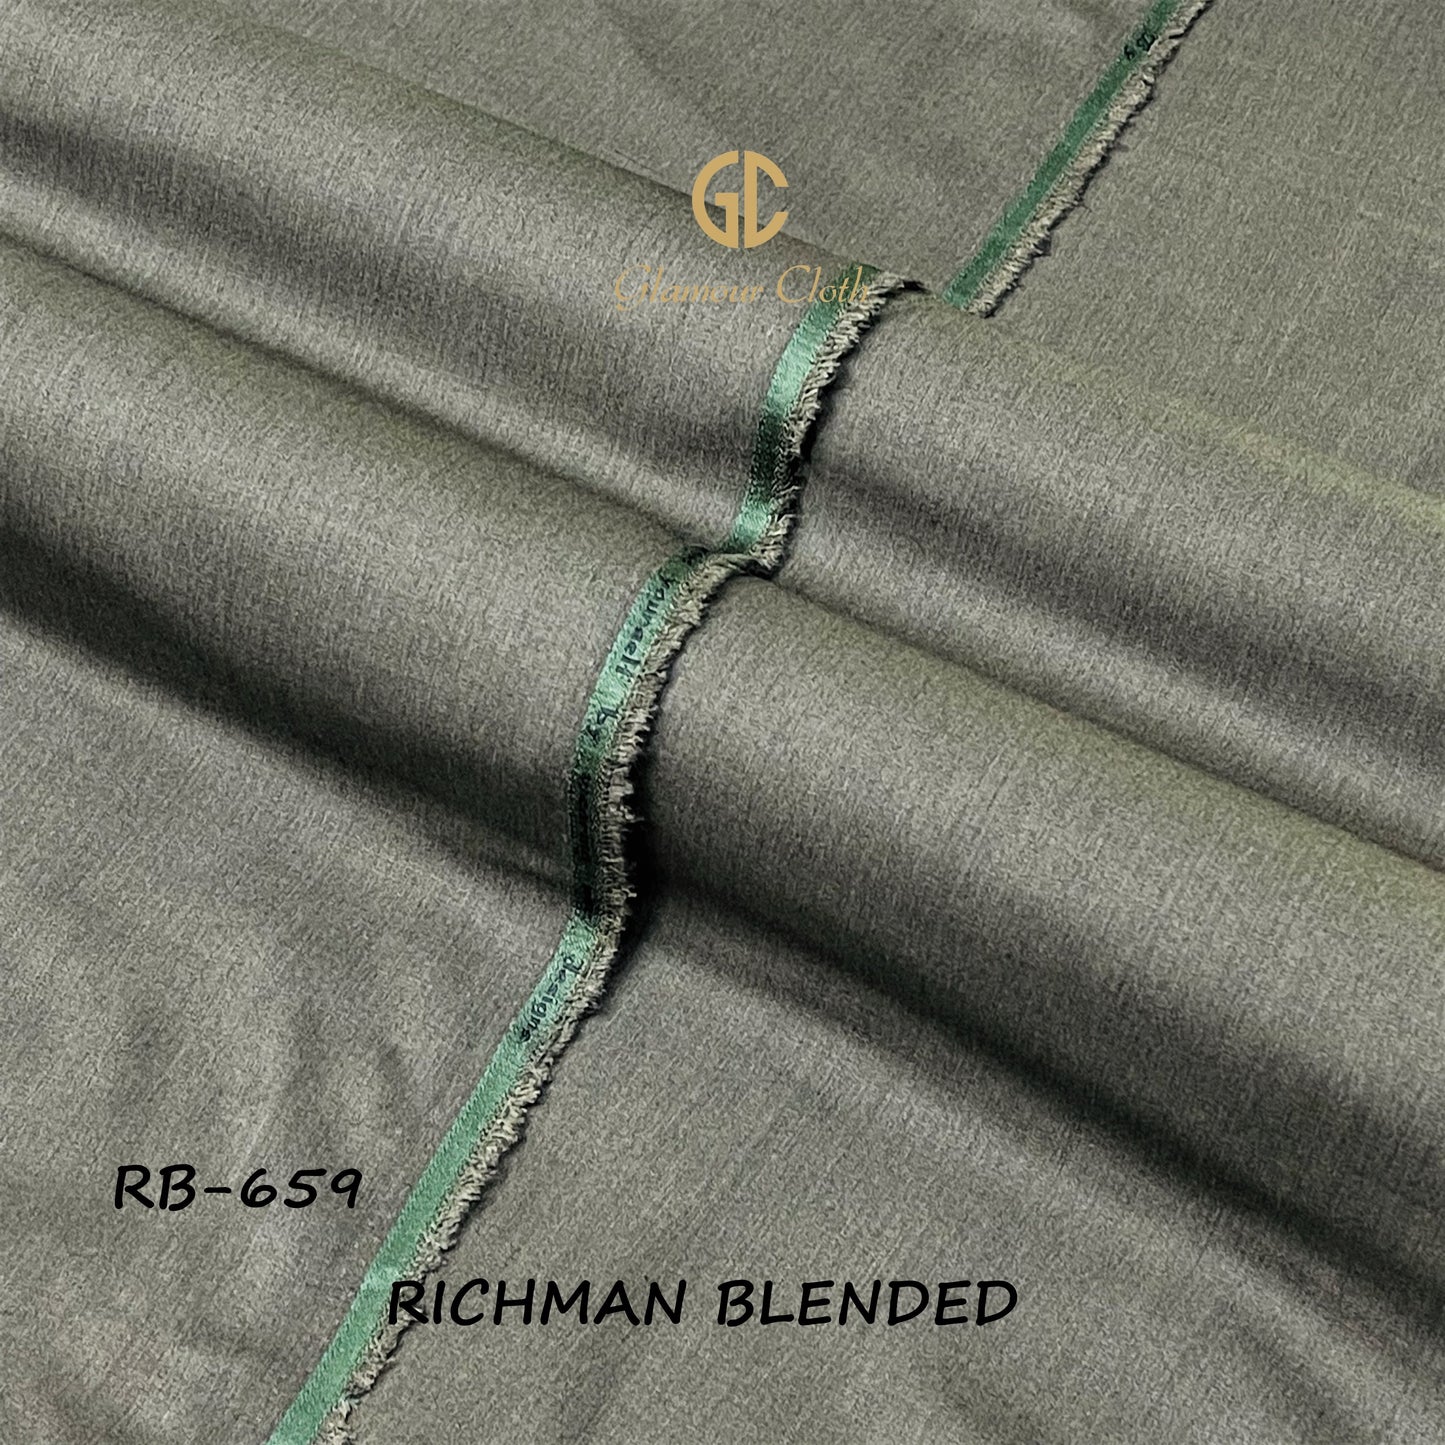 Richman Blended RB-659